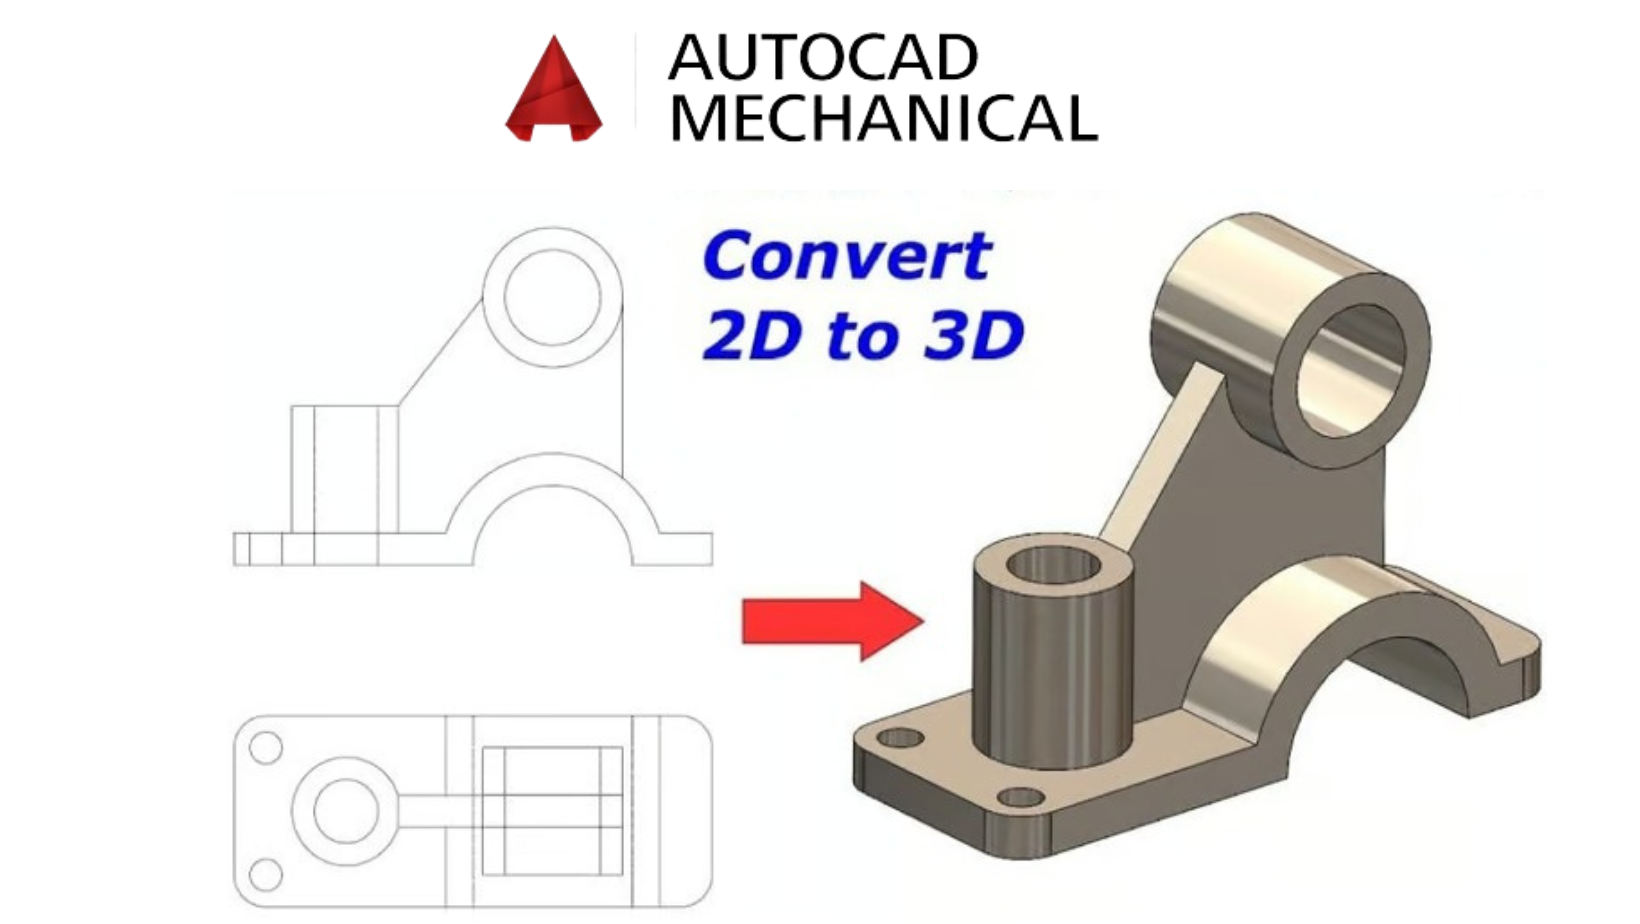 Mechanical Autocad